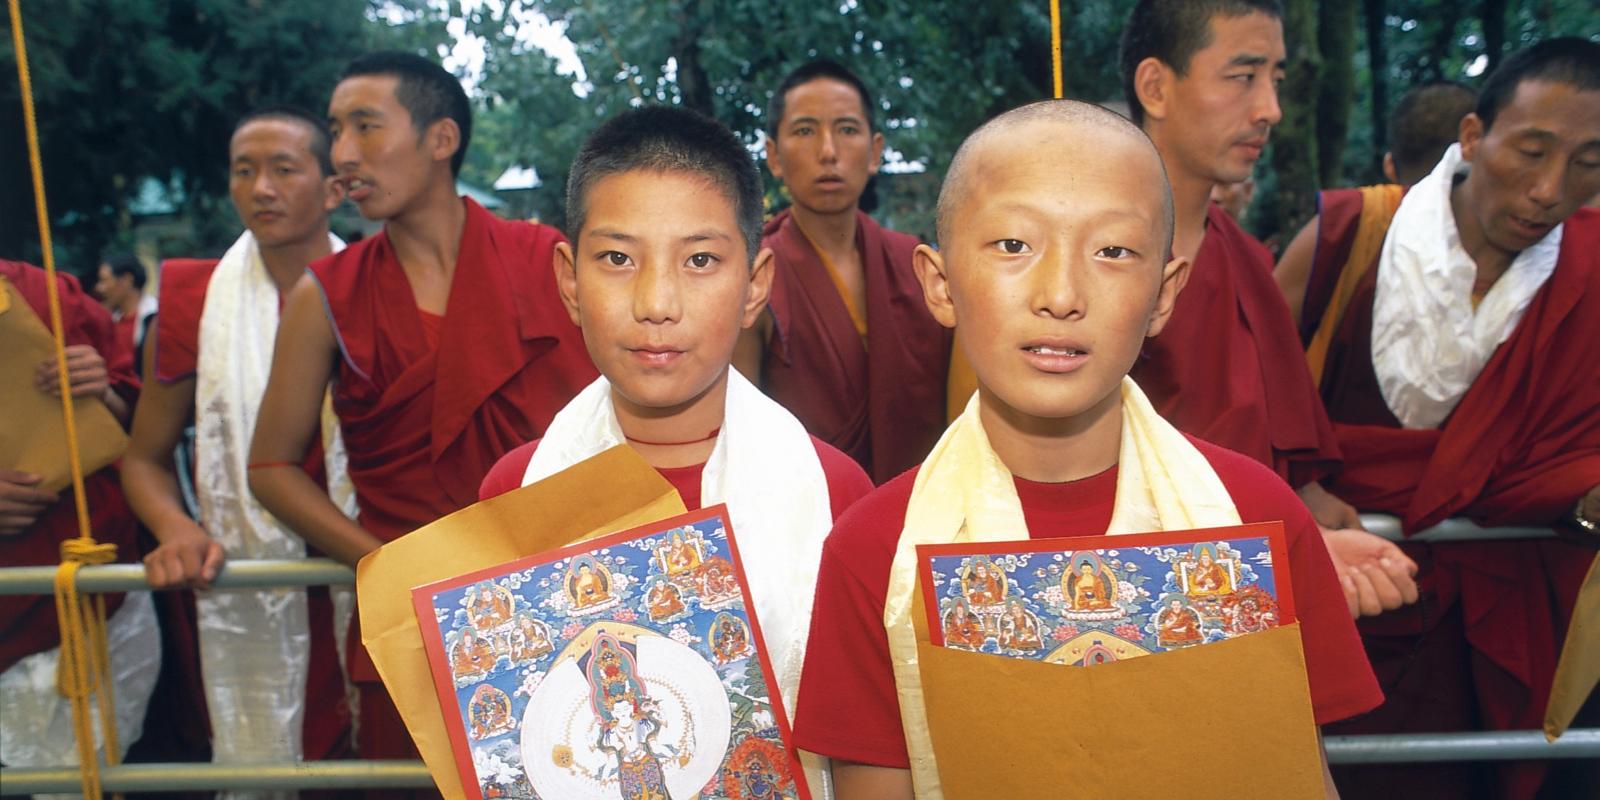 Two Tibetan boys and several Monks